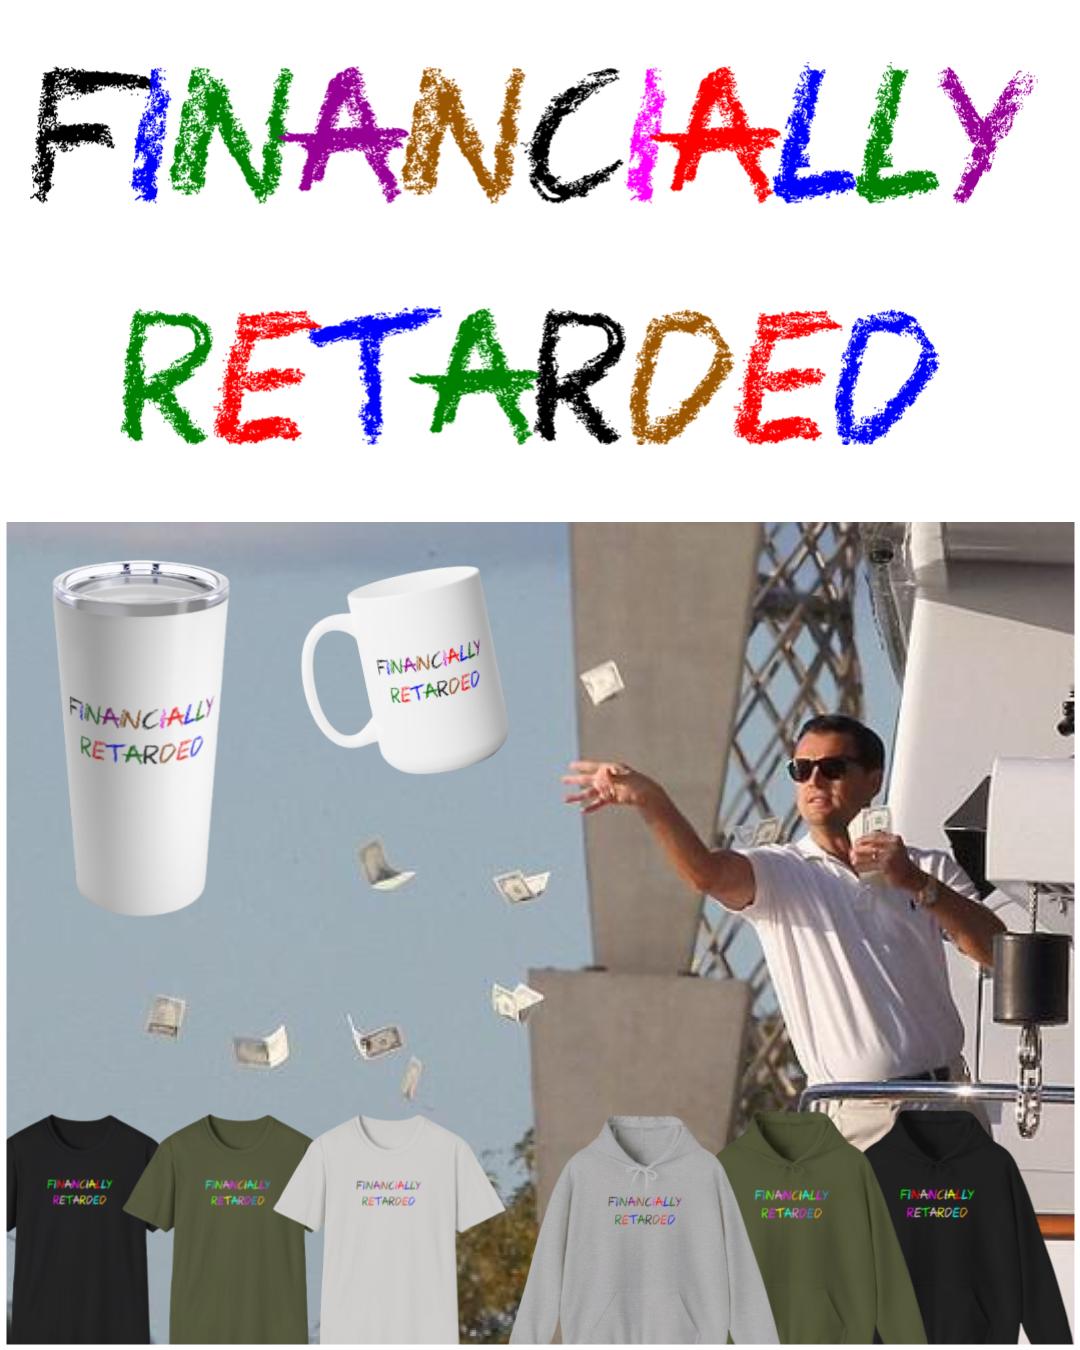 Financially Retarded